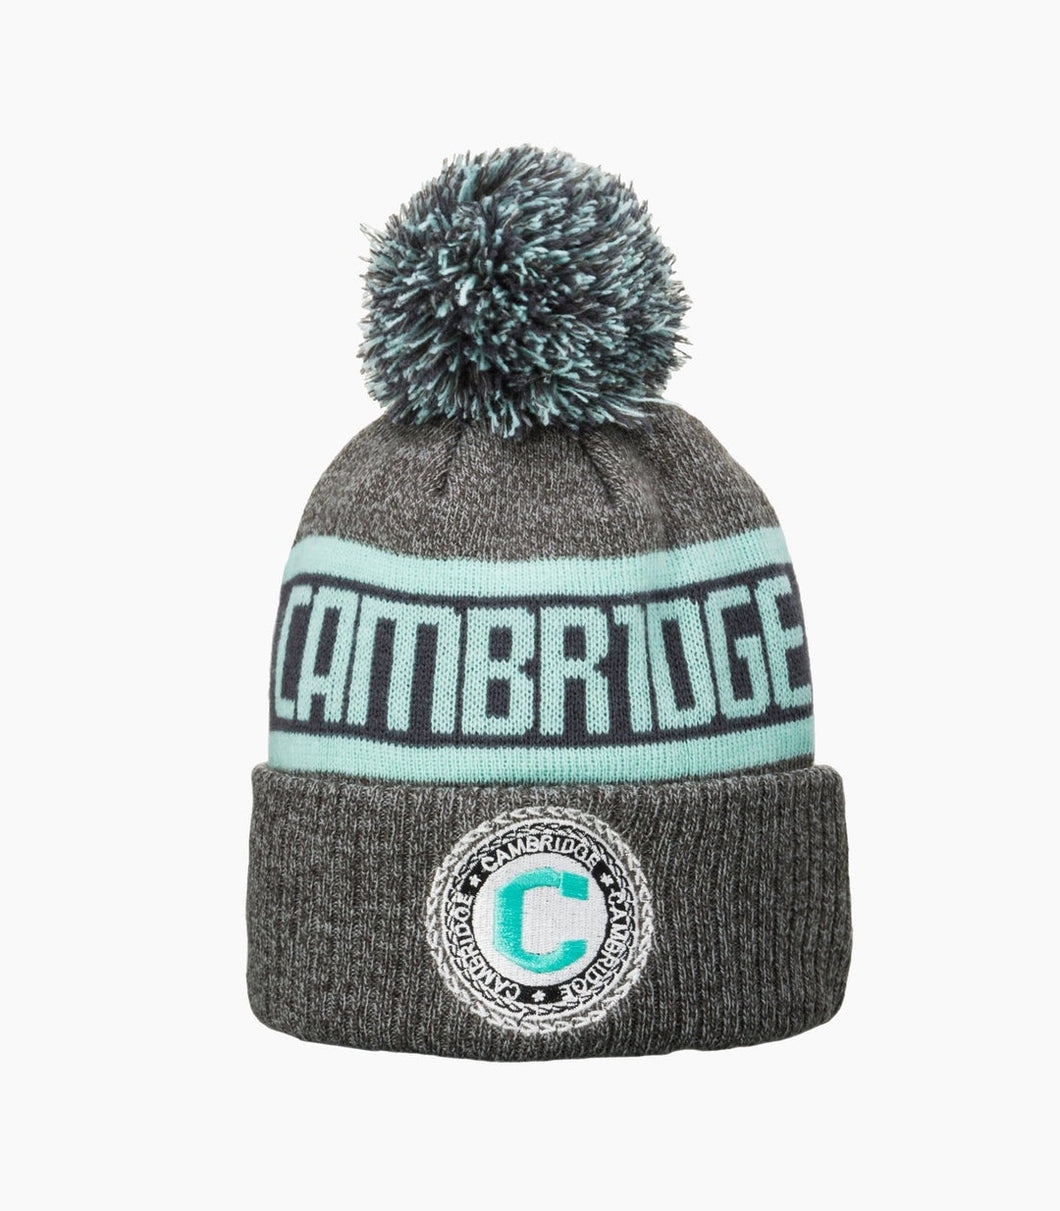 Cambridge Bobble Hat Ted Grey/Blue